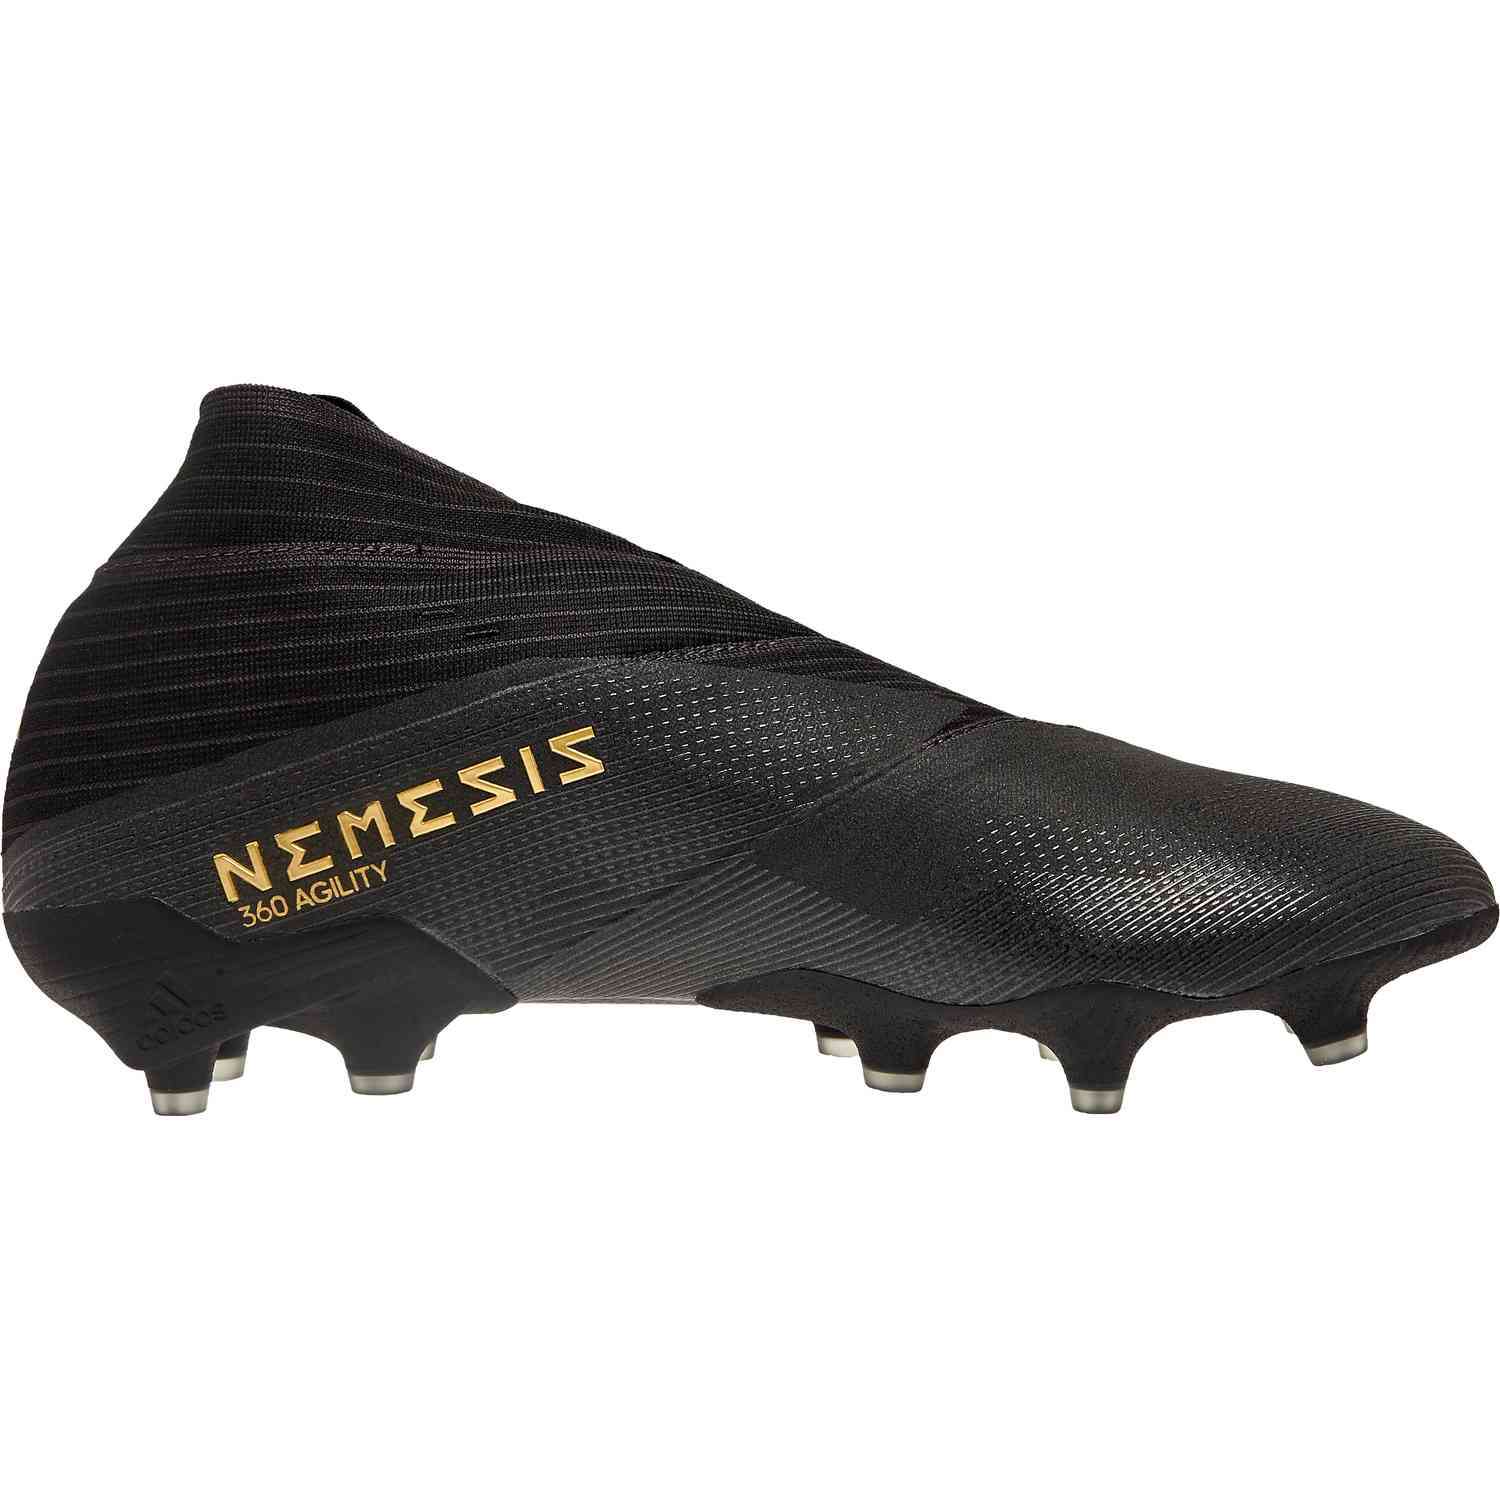 nemesis soccer boots